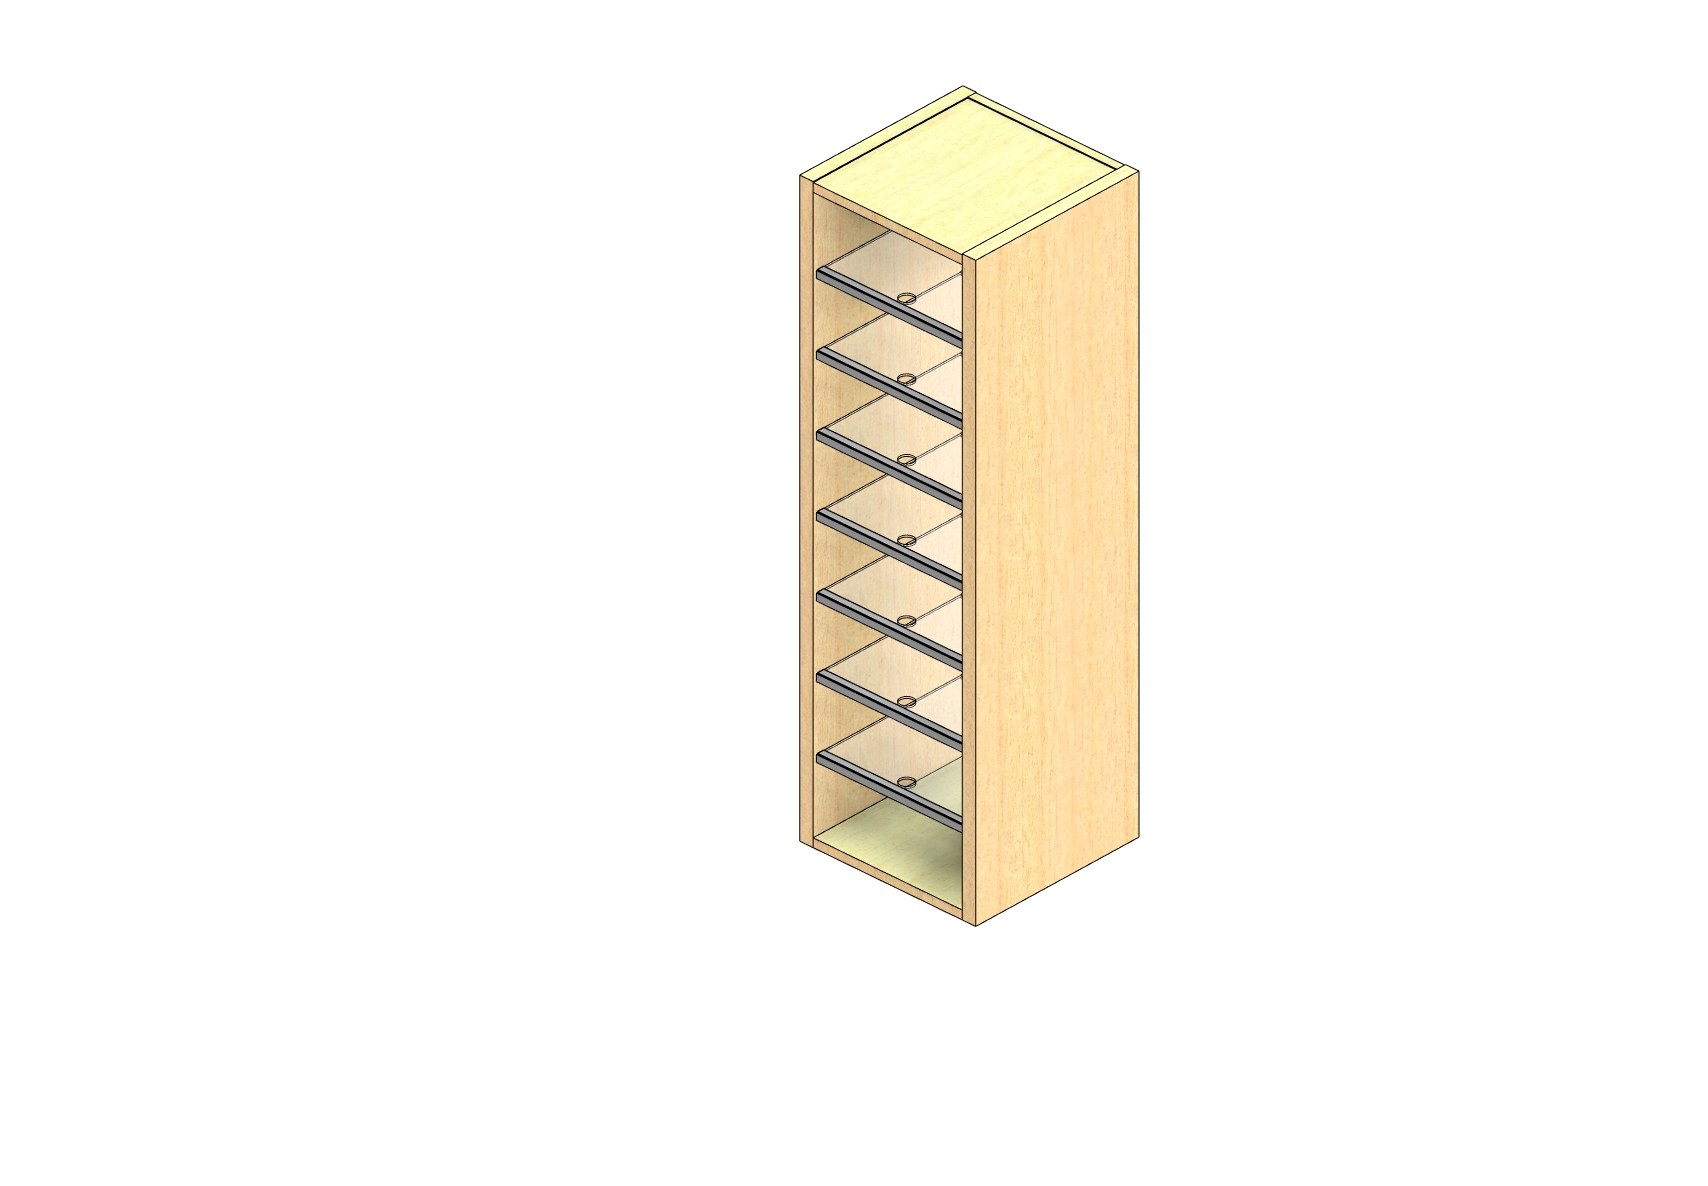 Standard Sized Open Back Sort Module - 1 Column - 42" Sorting Height w/ No Riser